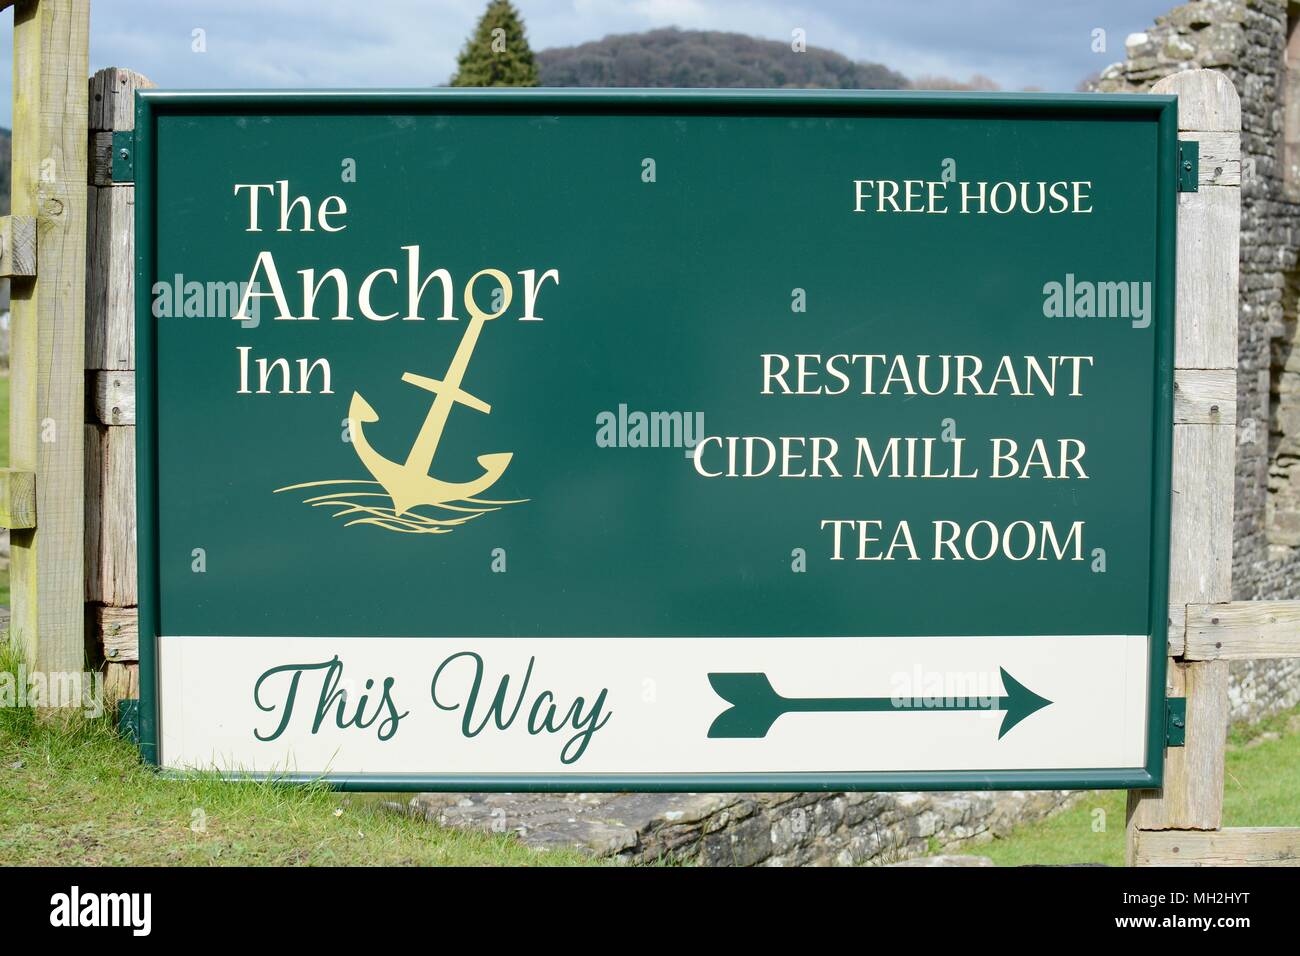 The anchor inn pub sign, Tintern, Wye valley, Monmouthshire, UK Stock Photo